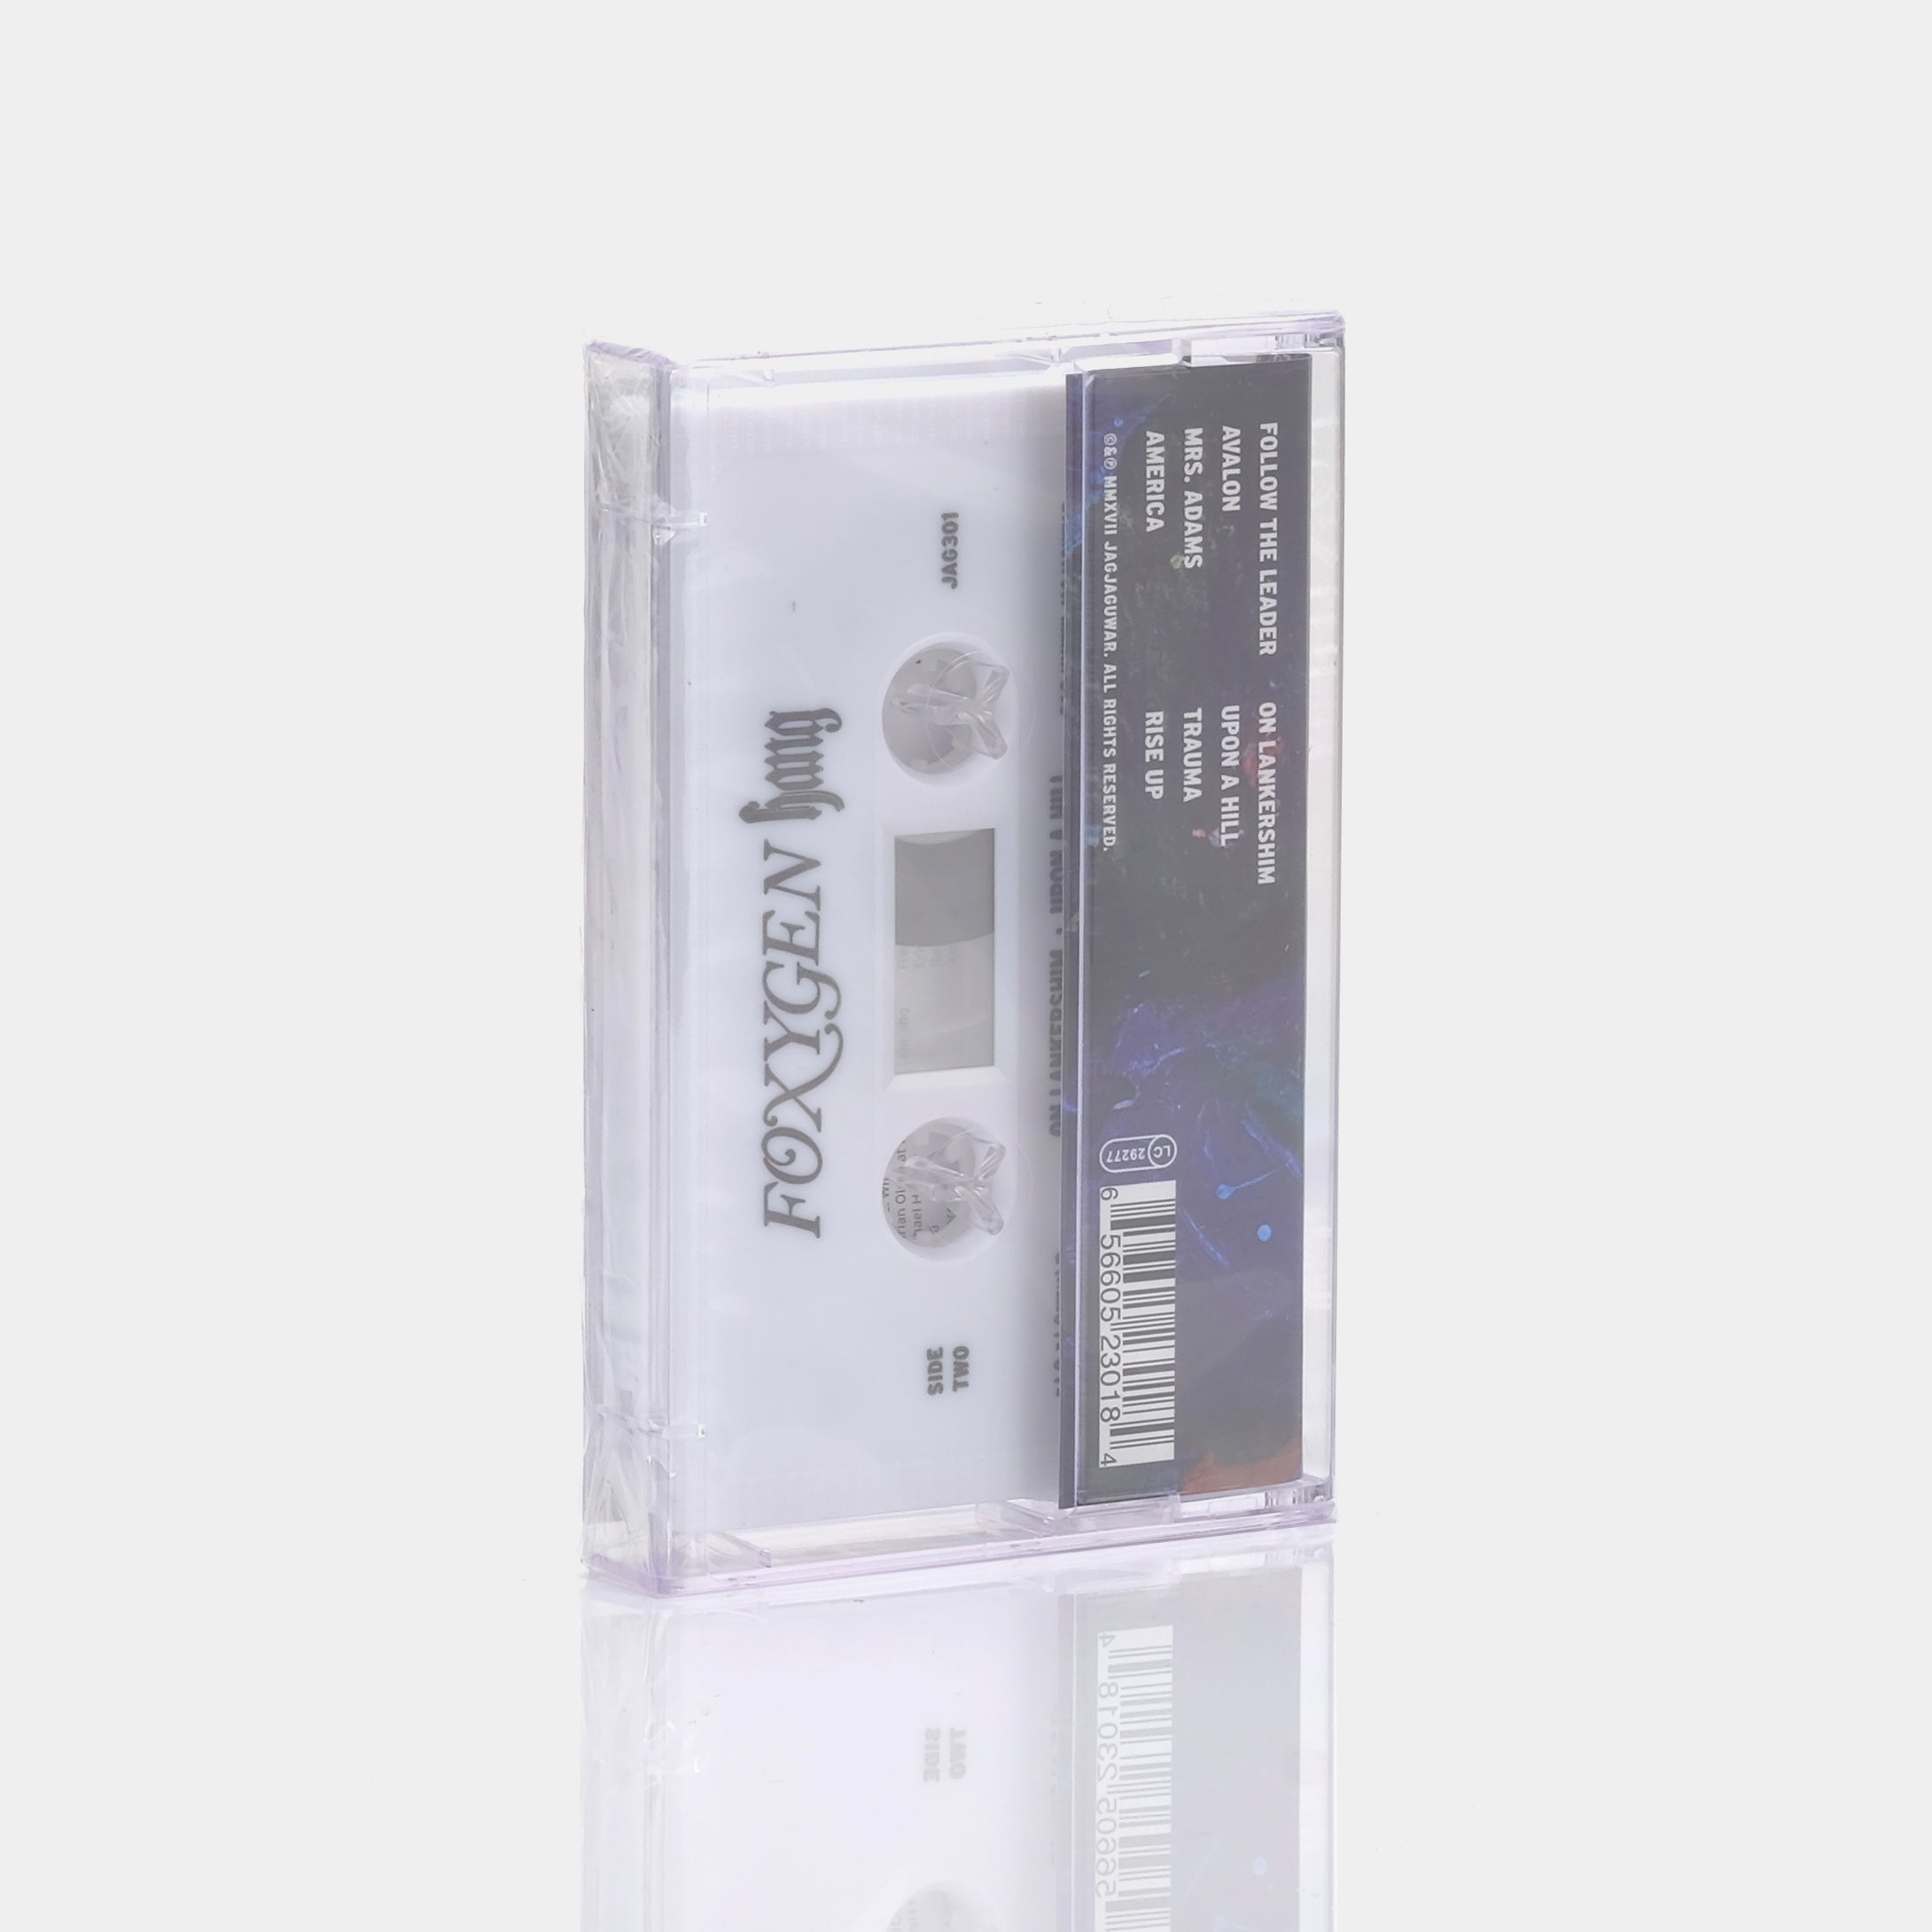 Foxygen - Hang Cassette Tape